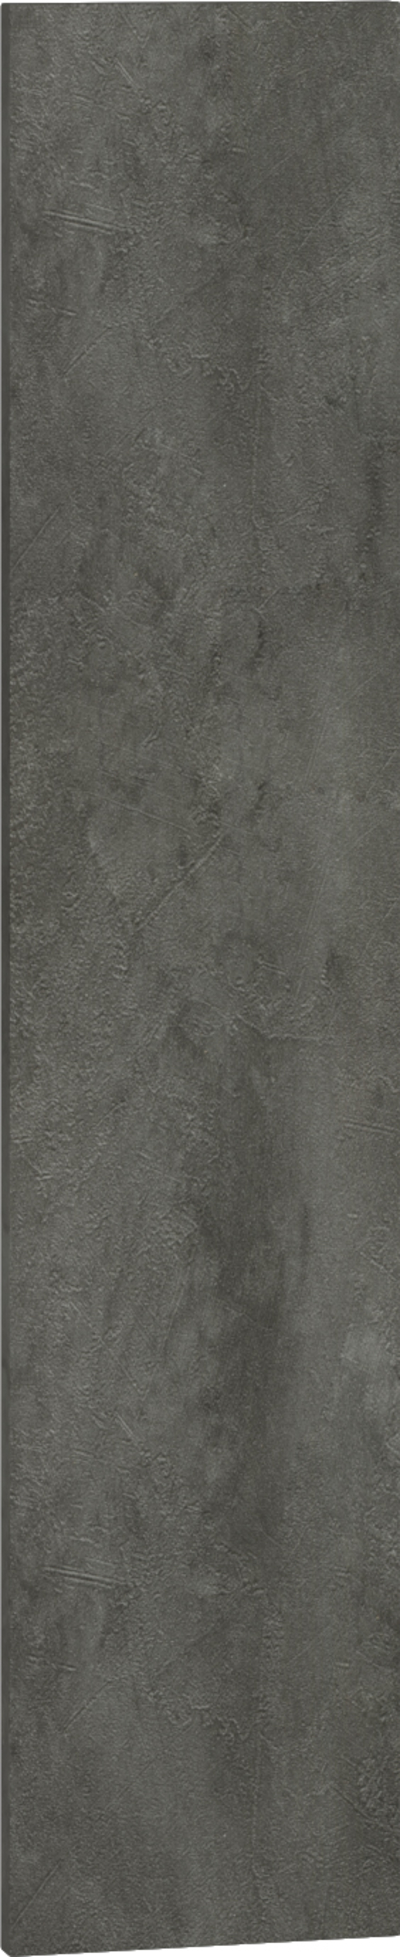 BlanKit F15 CementDark.M361 | fasad-kuhonnogo-shkafa-ruchka